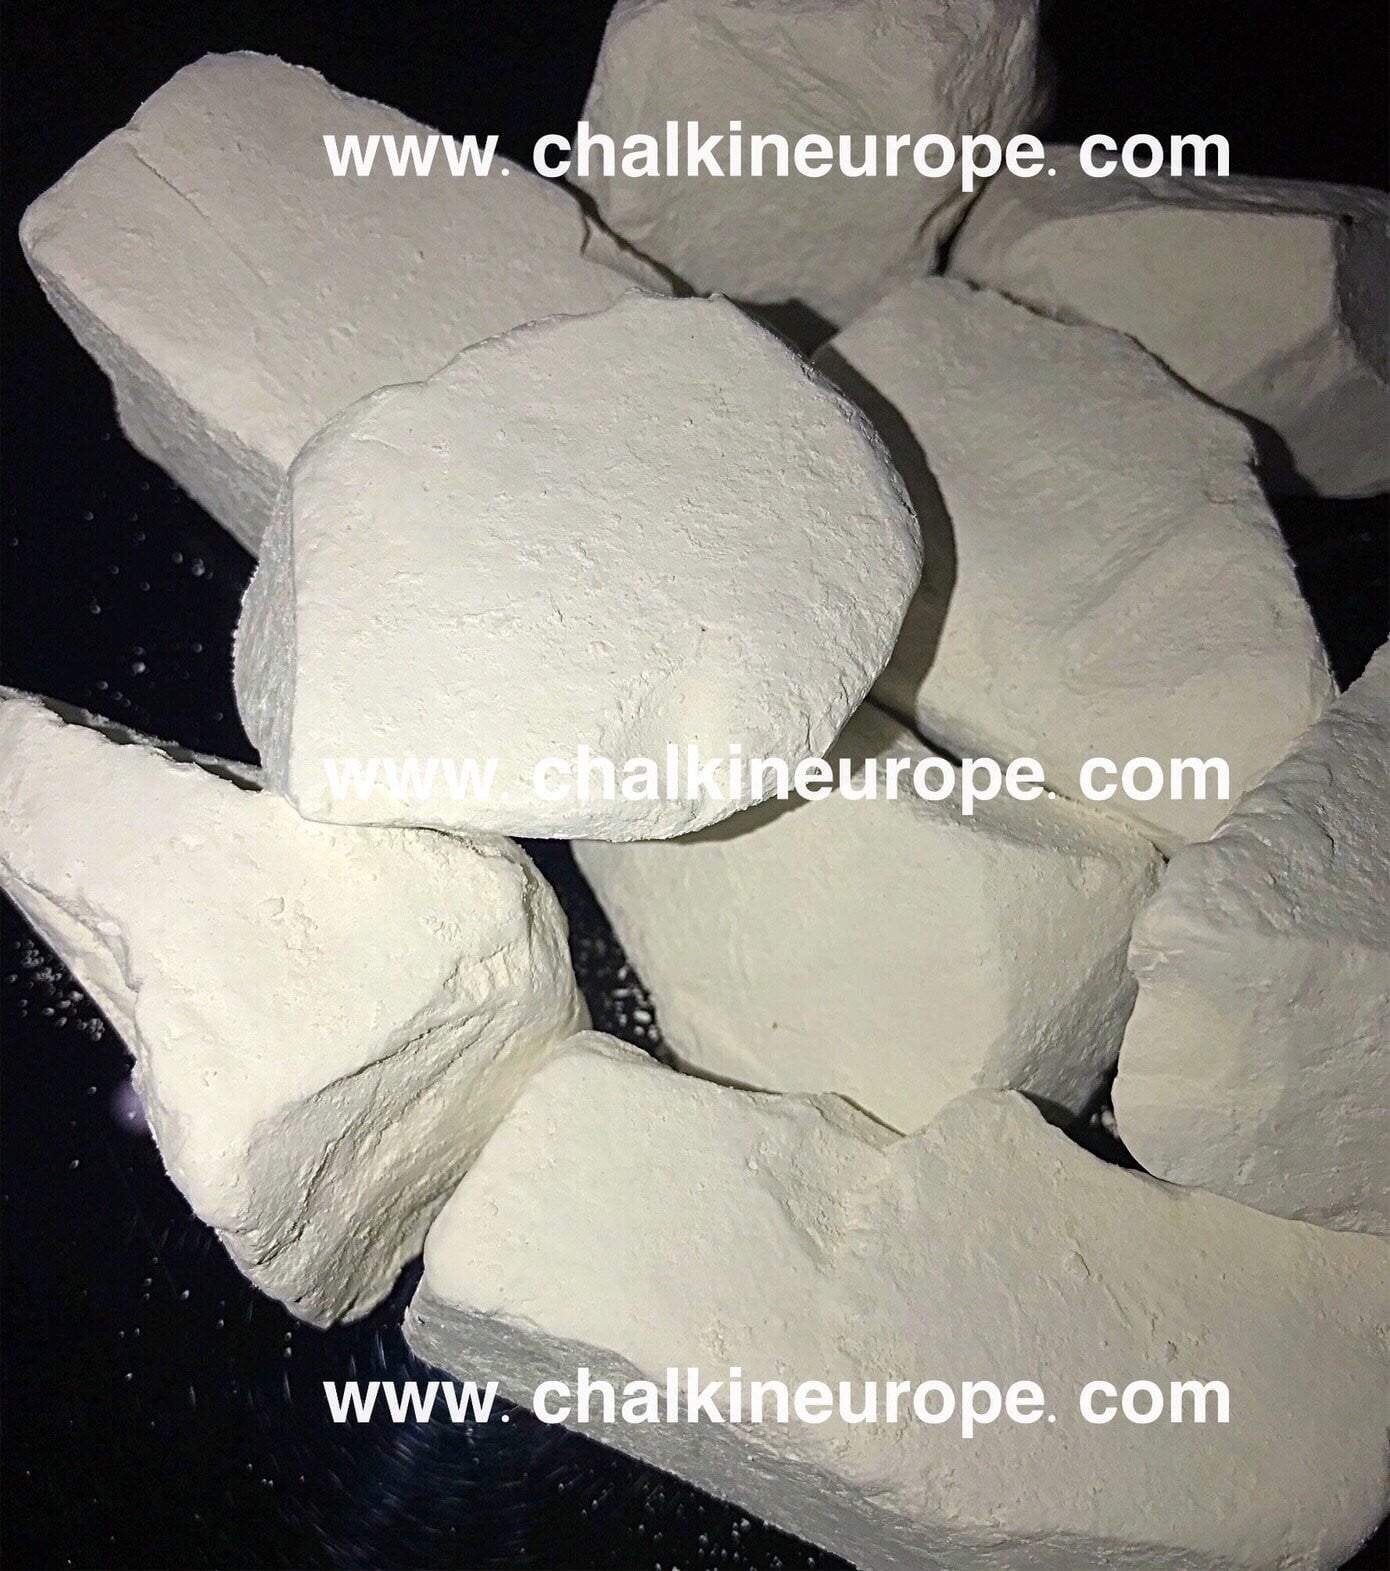 Natural Chalk Chunks - Chalkineurope